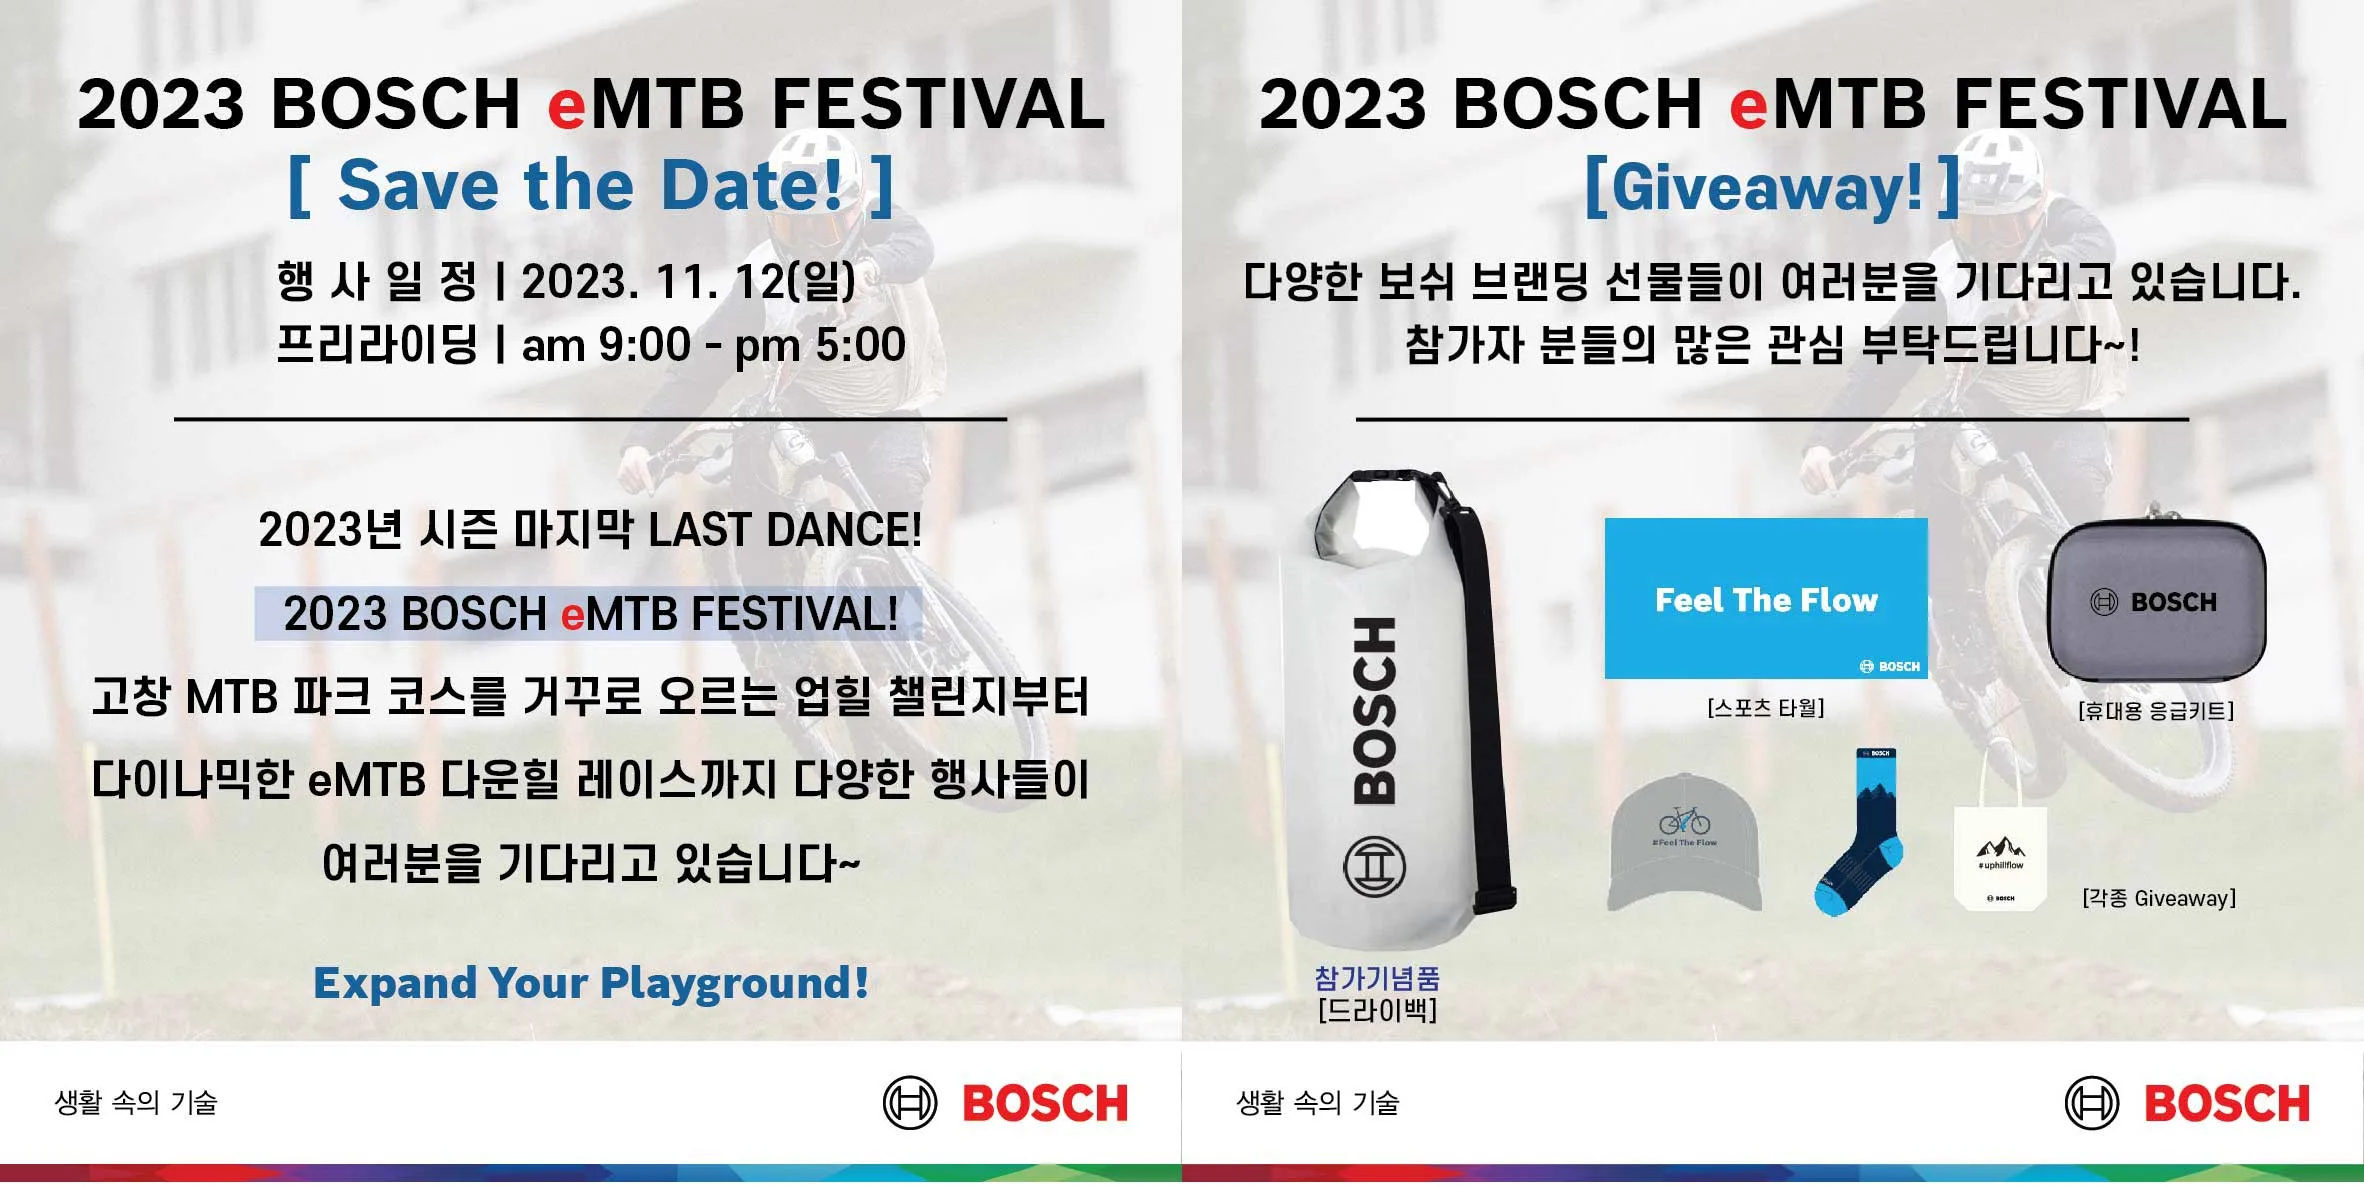 news_2023_Bosch_eMTB_Festival_1